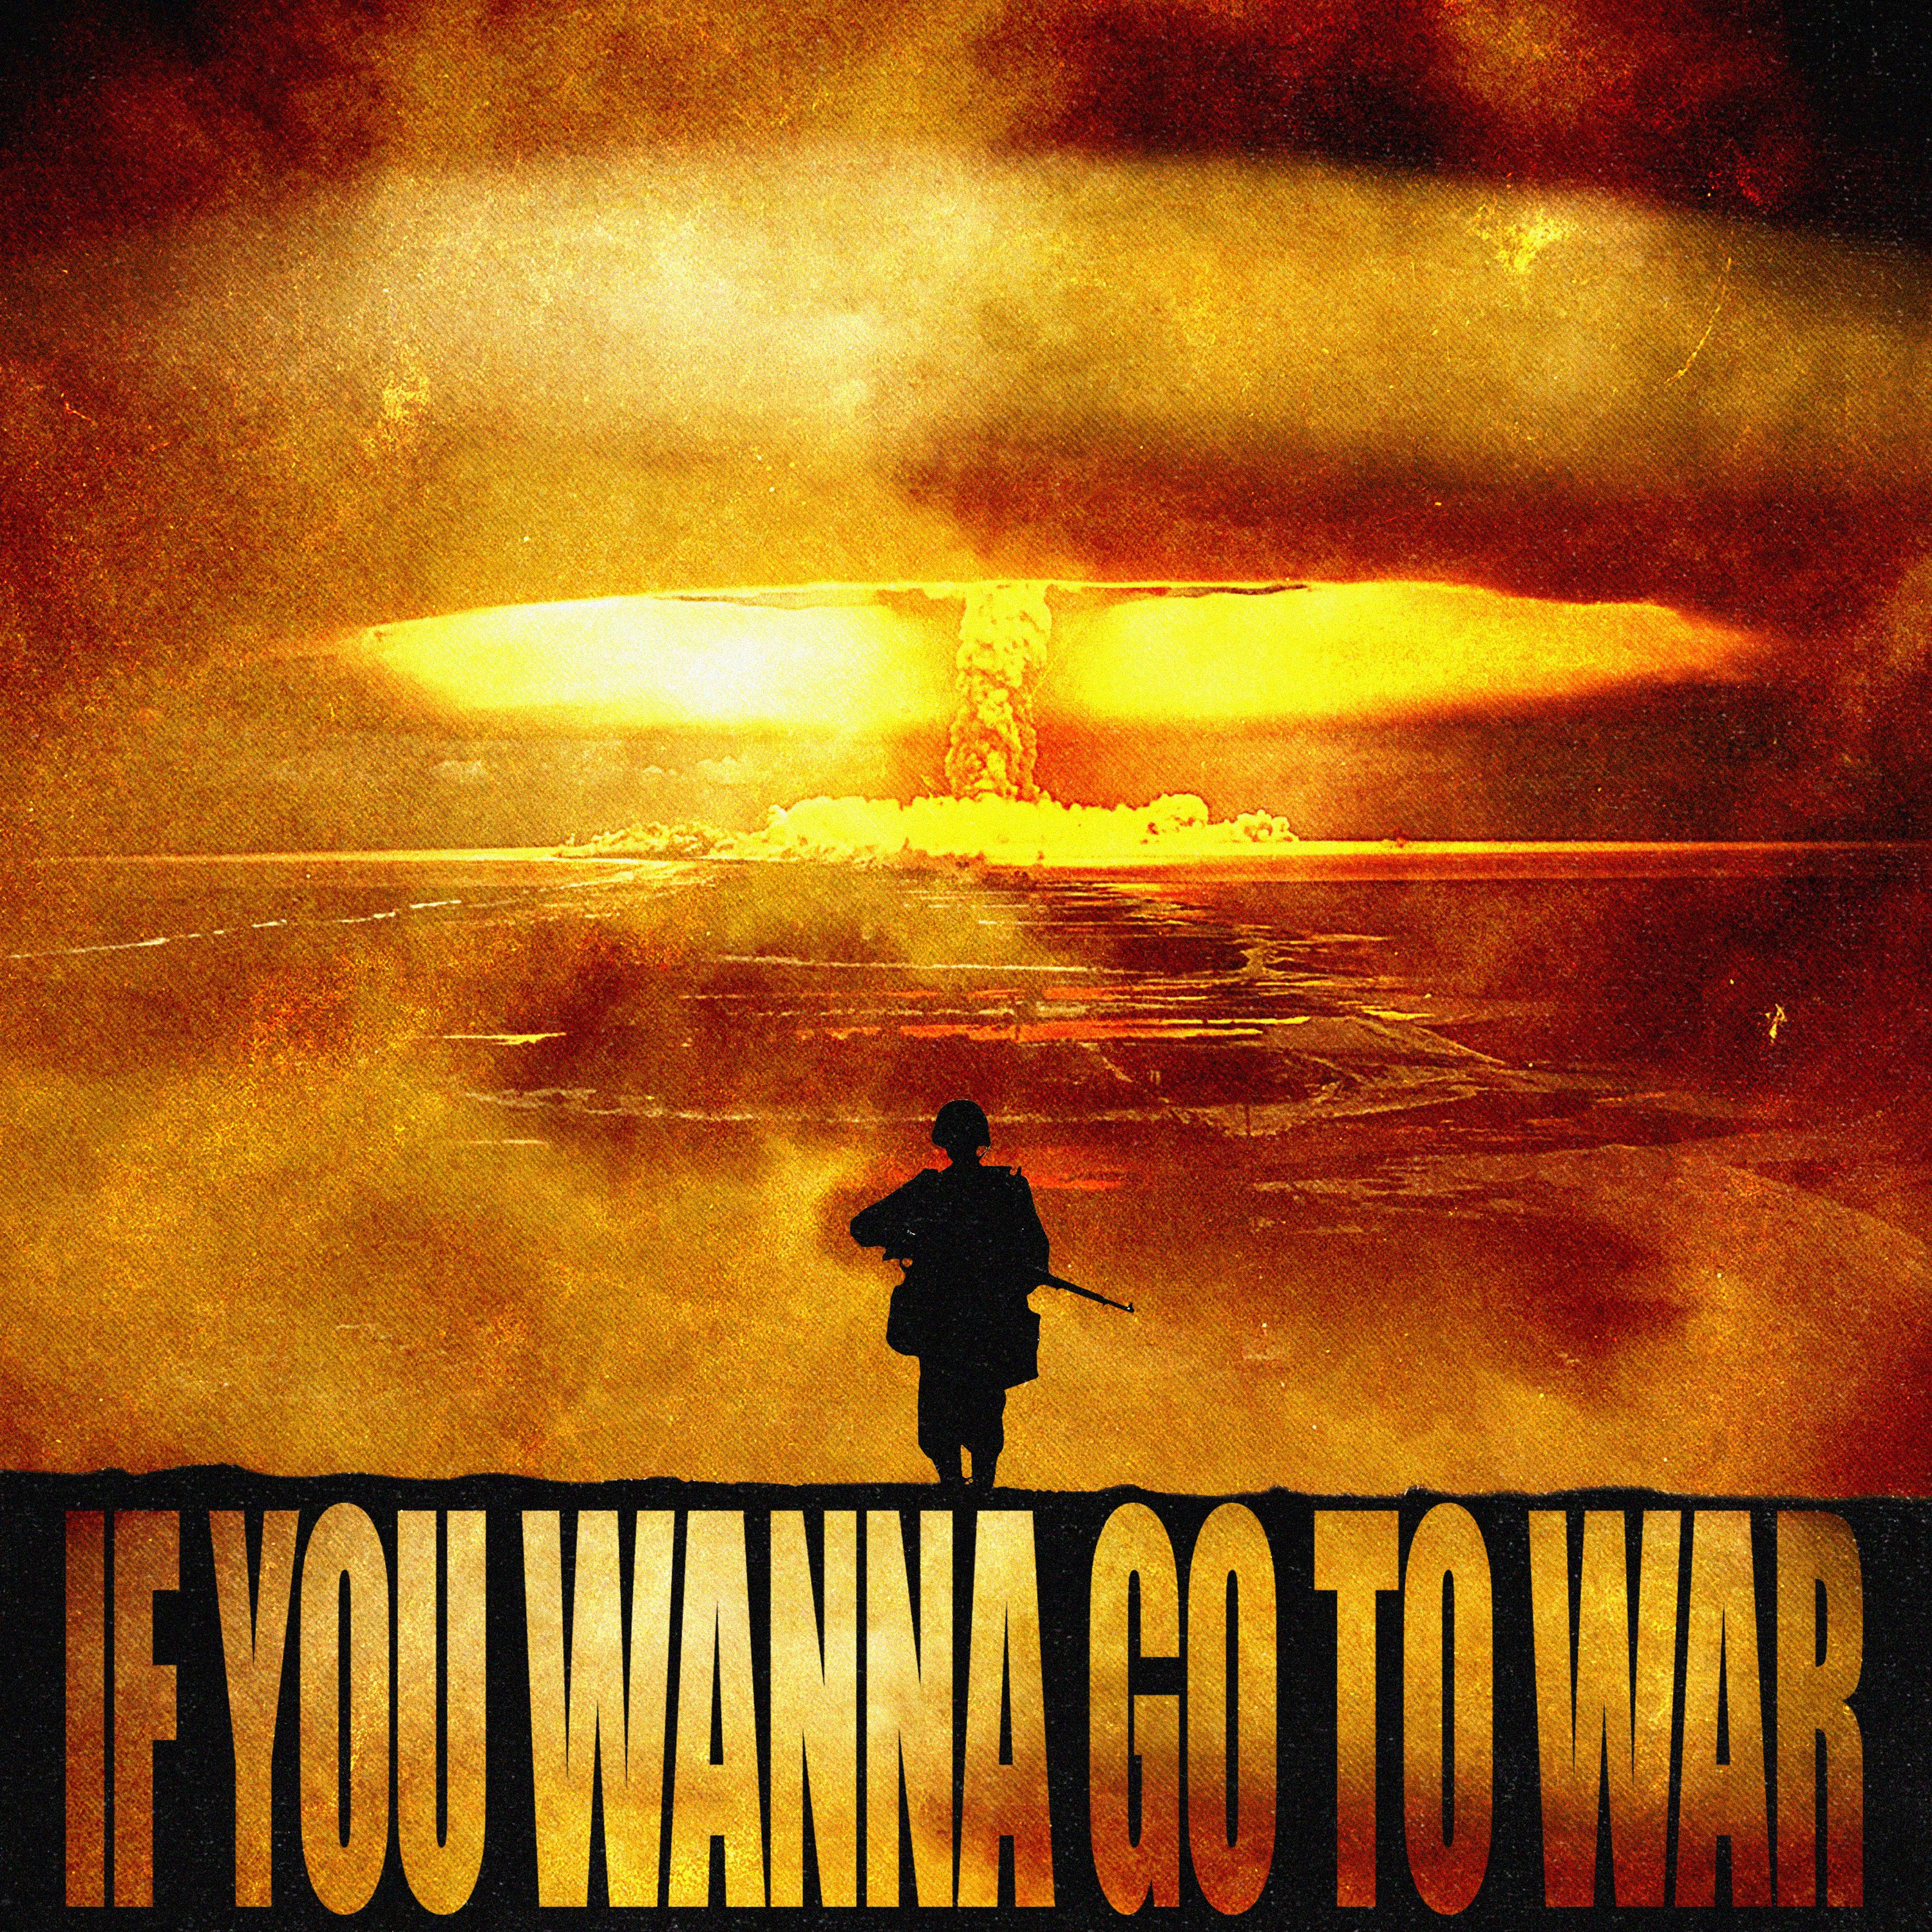 Tikiake IF U WANNA GO TO WAR